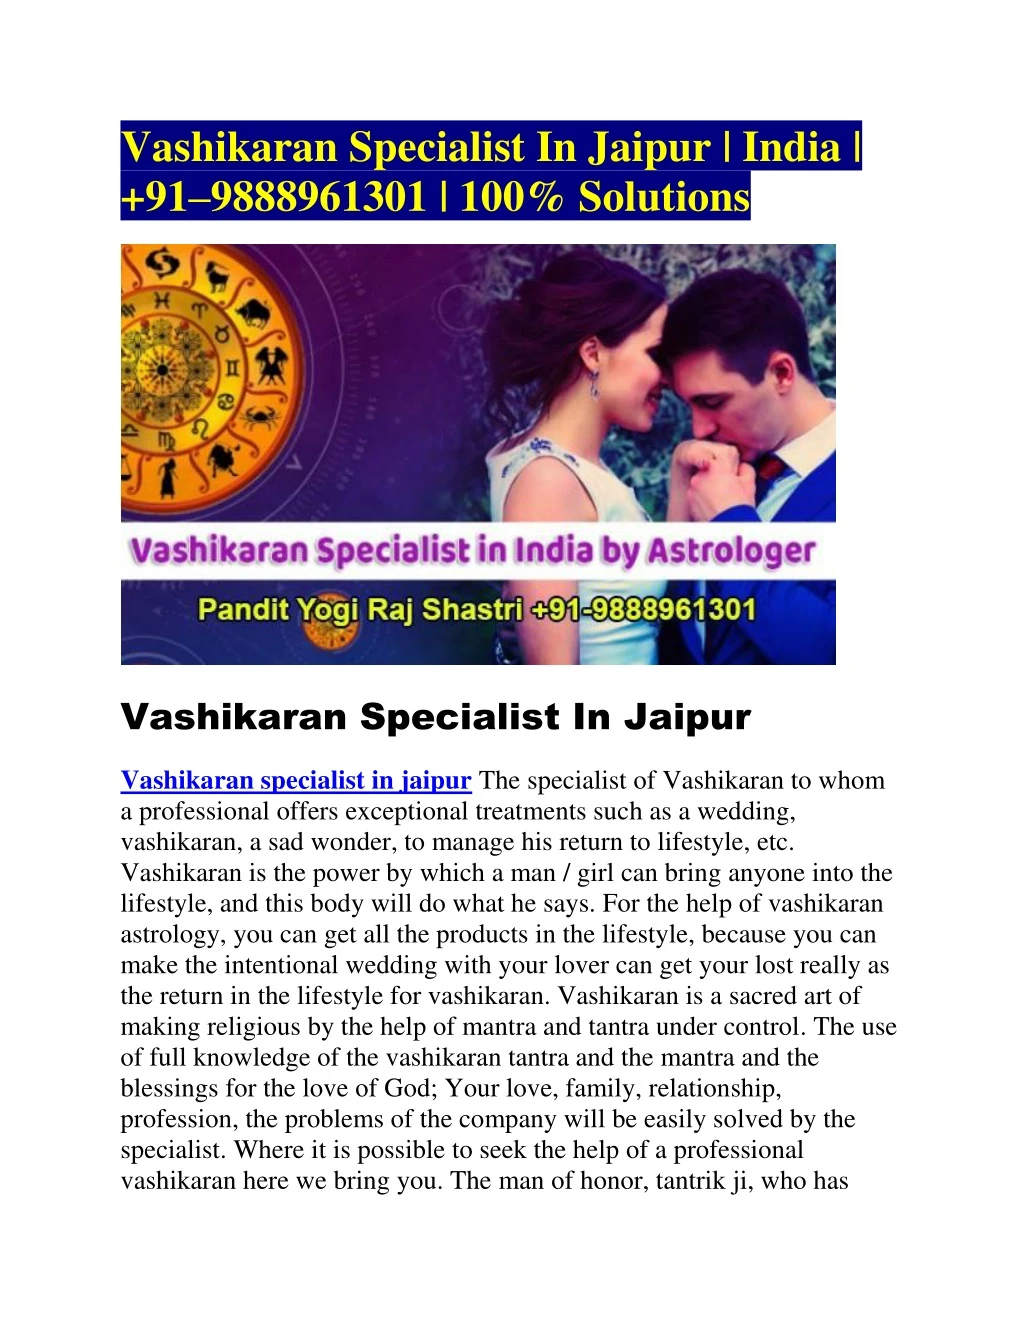 vashikaran specialist in jaipur india